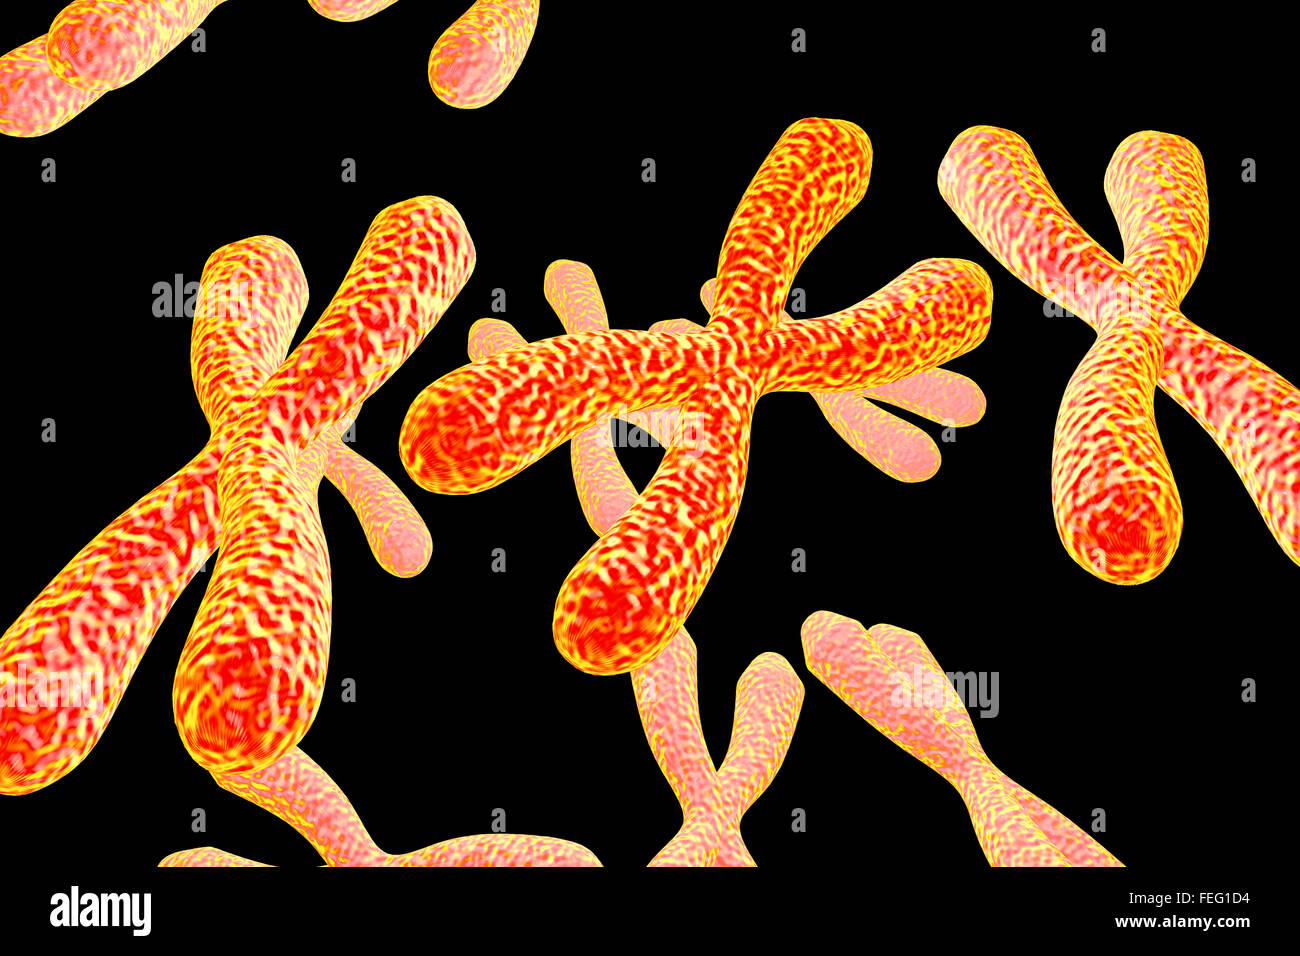 Computer illustration of human chromosomes. Stock Photo